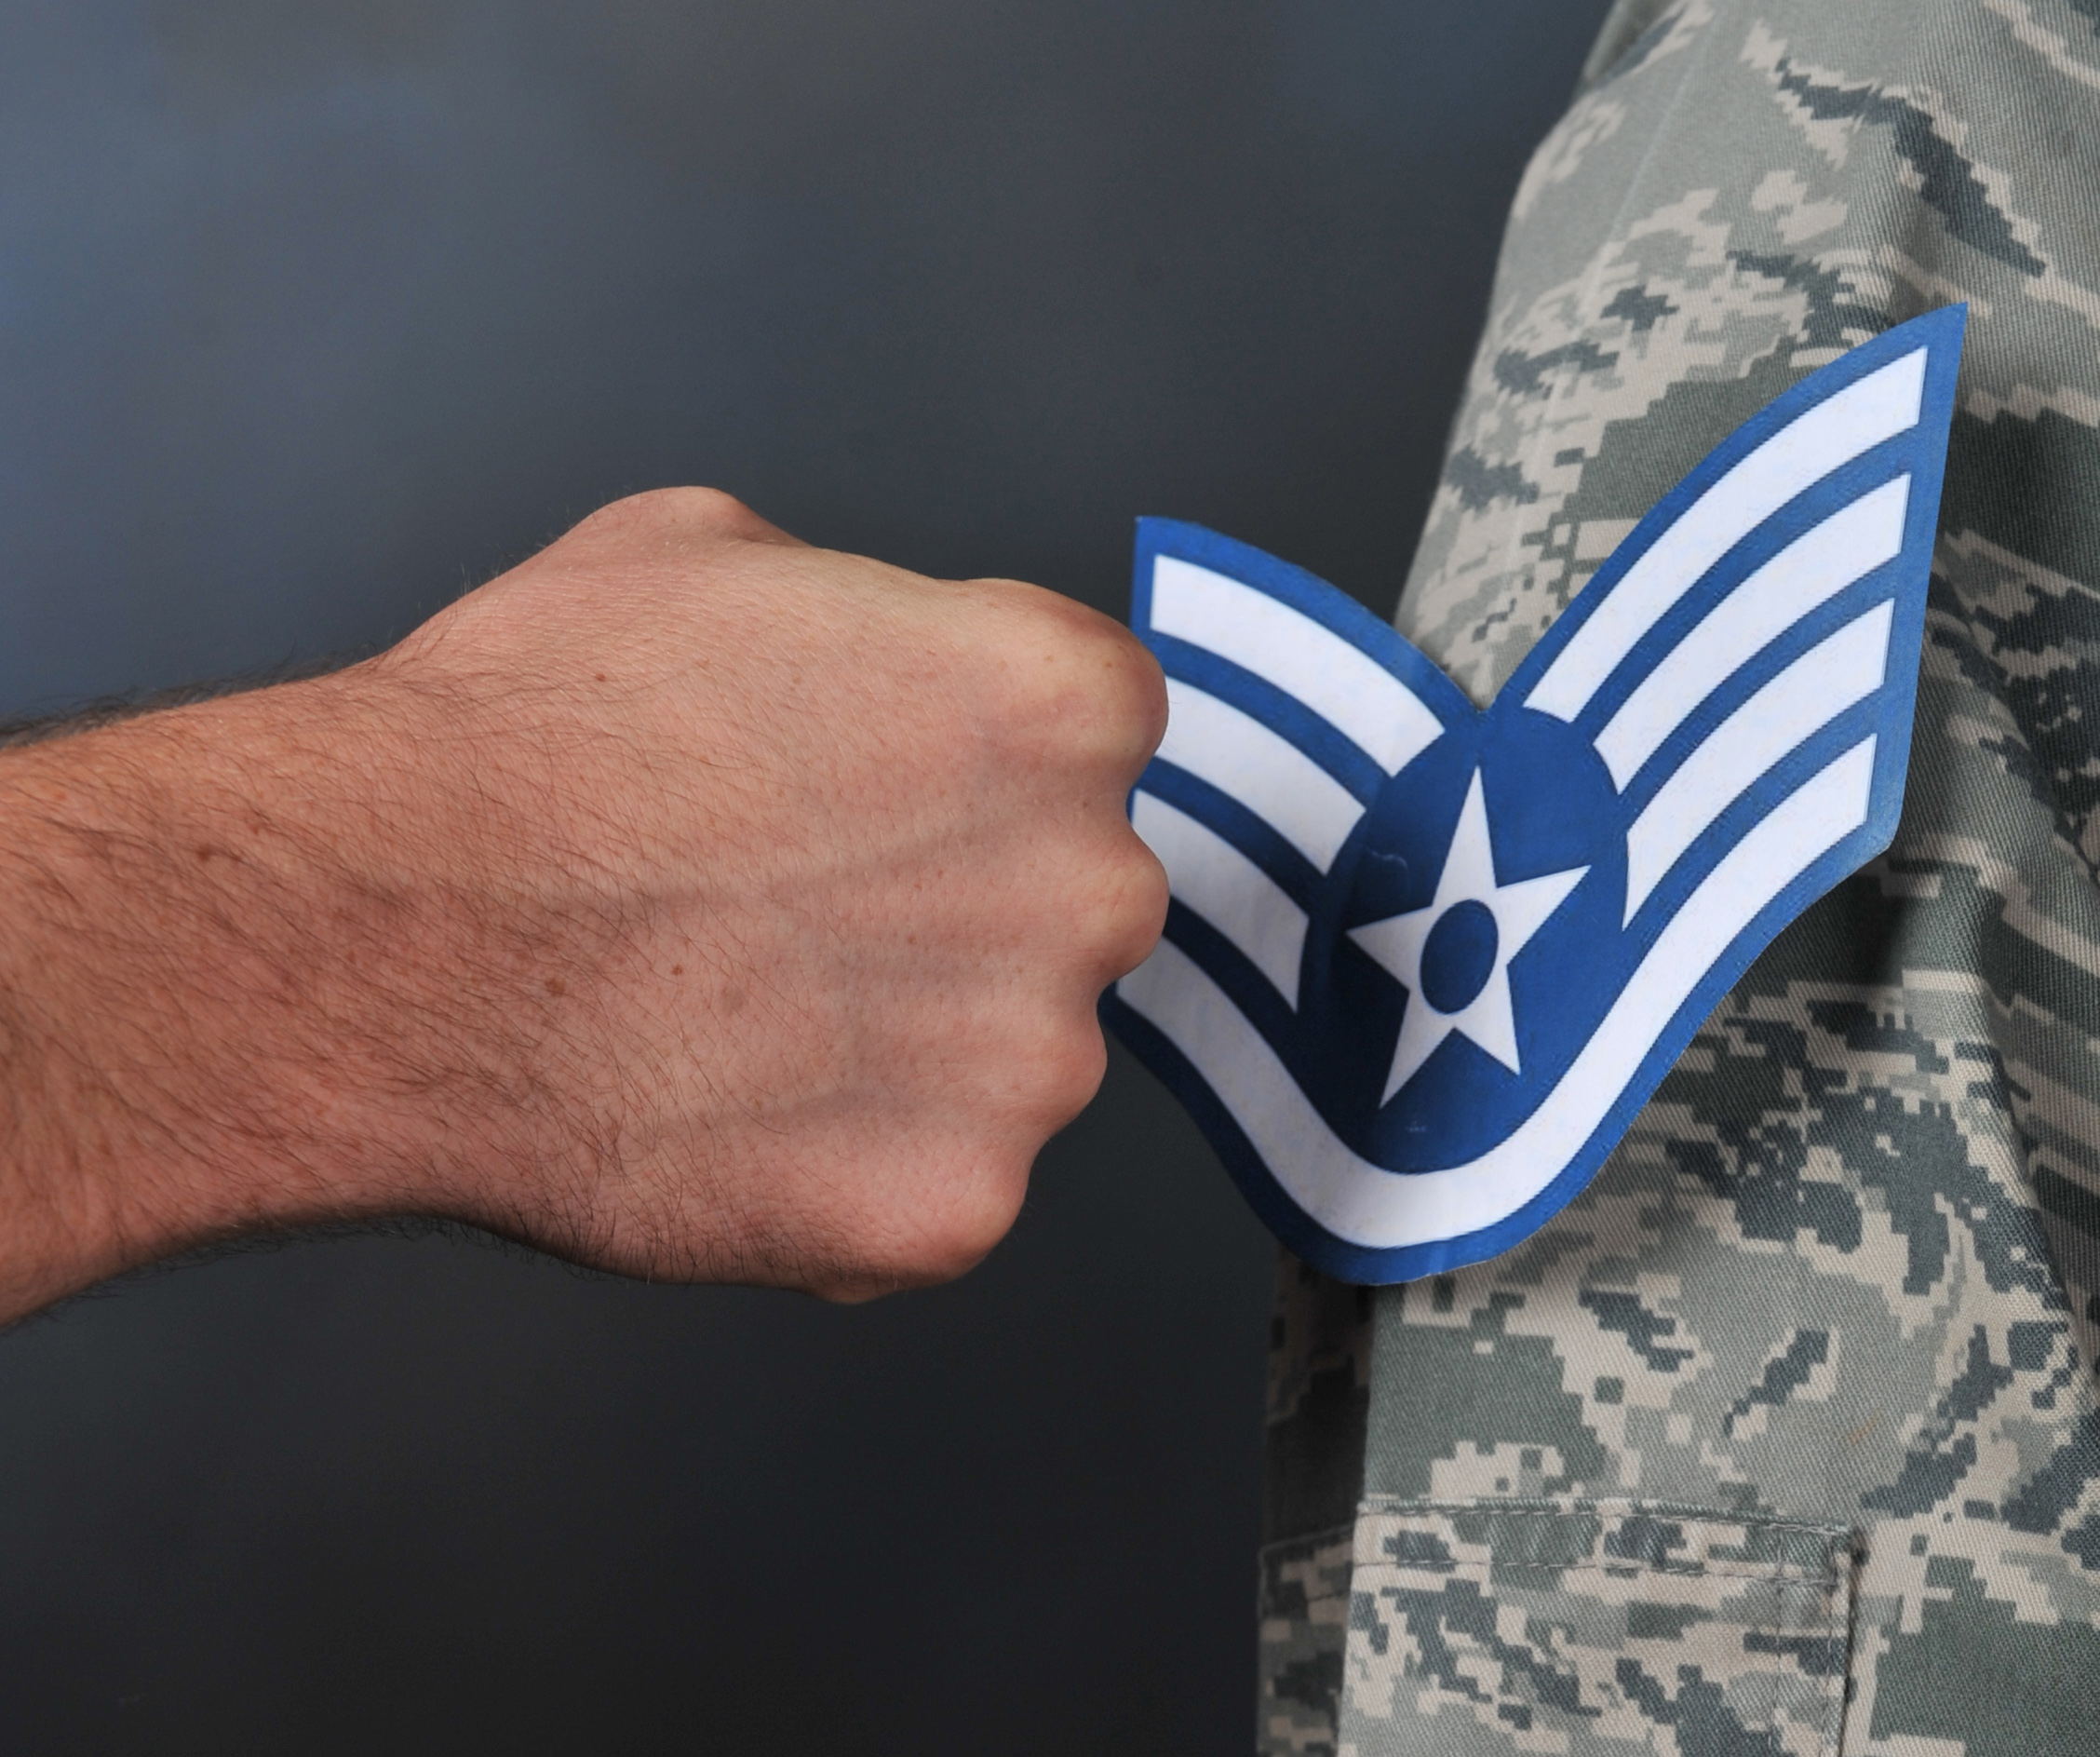 Barksdale celebrates newest NCOs > Barksdale Air Force Base > News